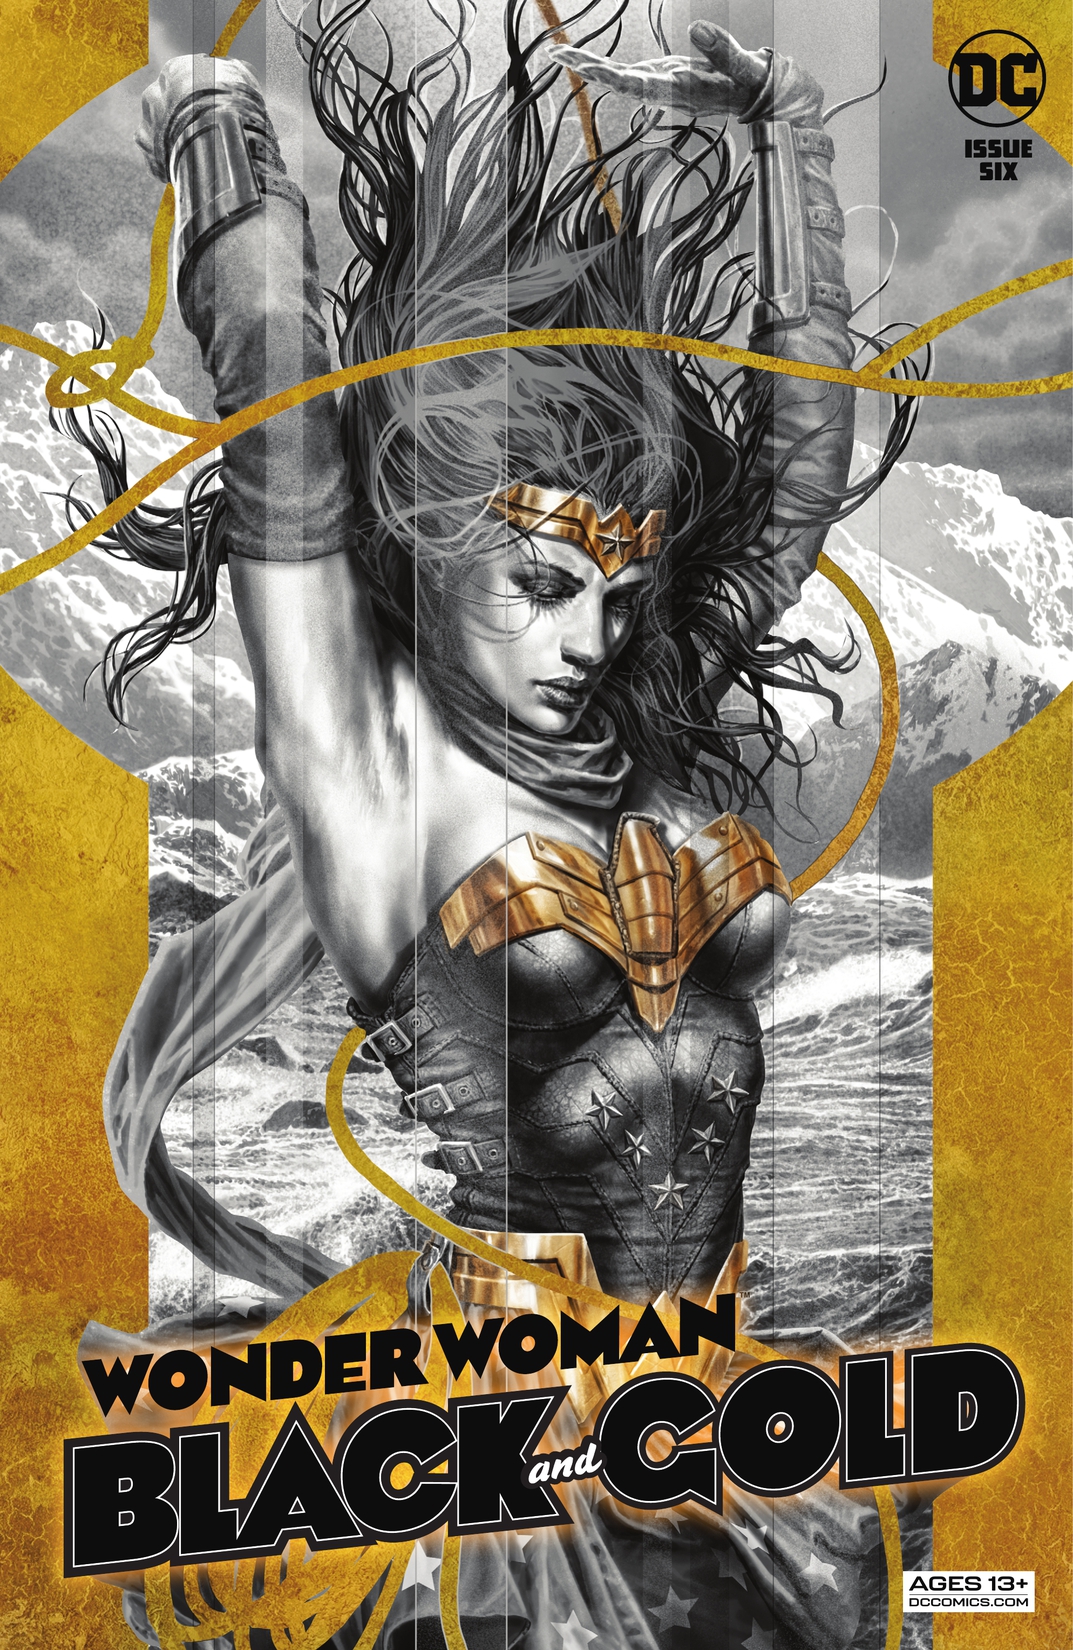 Wonder Woman Black & Gold #6 preview images